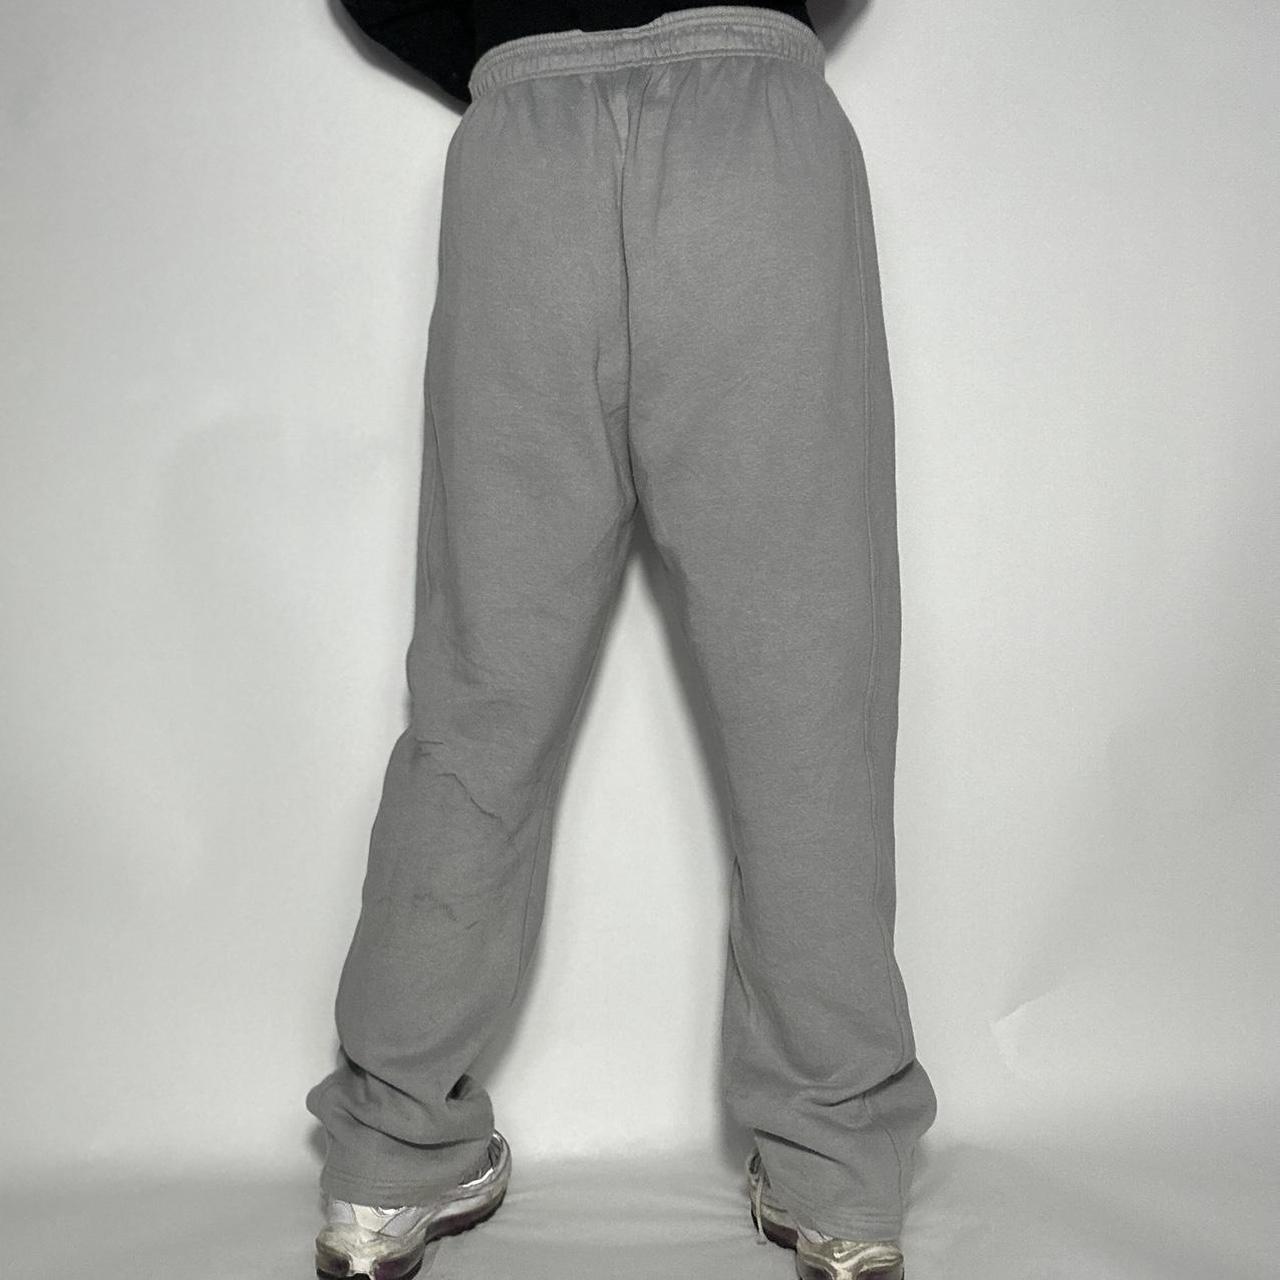 Adidas vintage 90s grey track pants